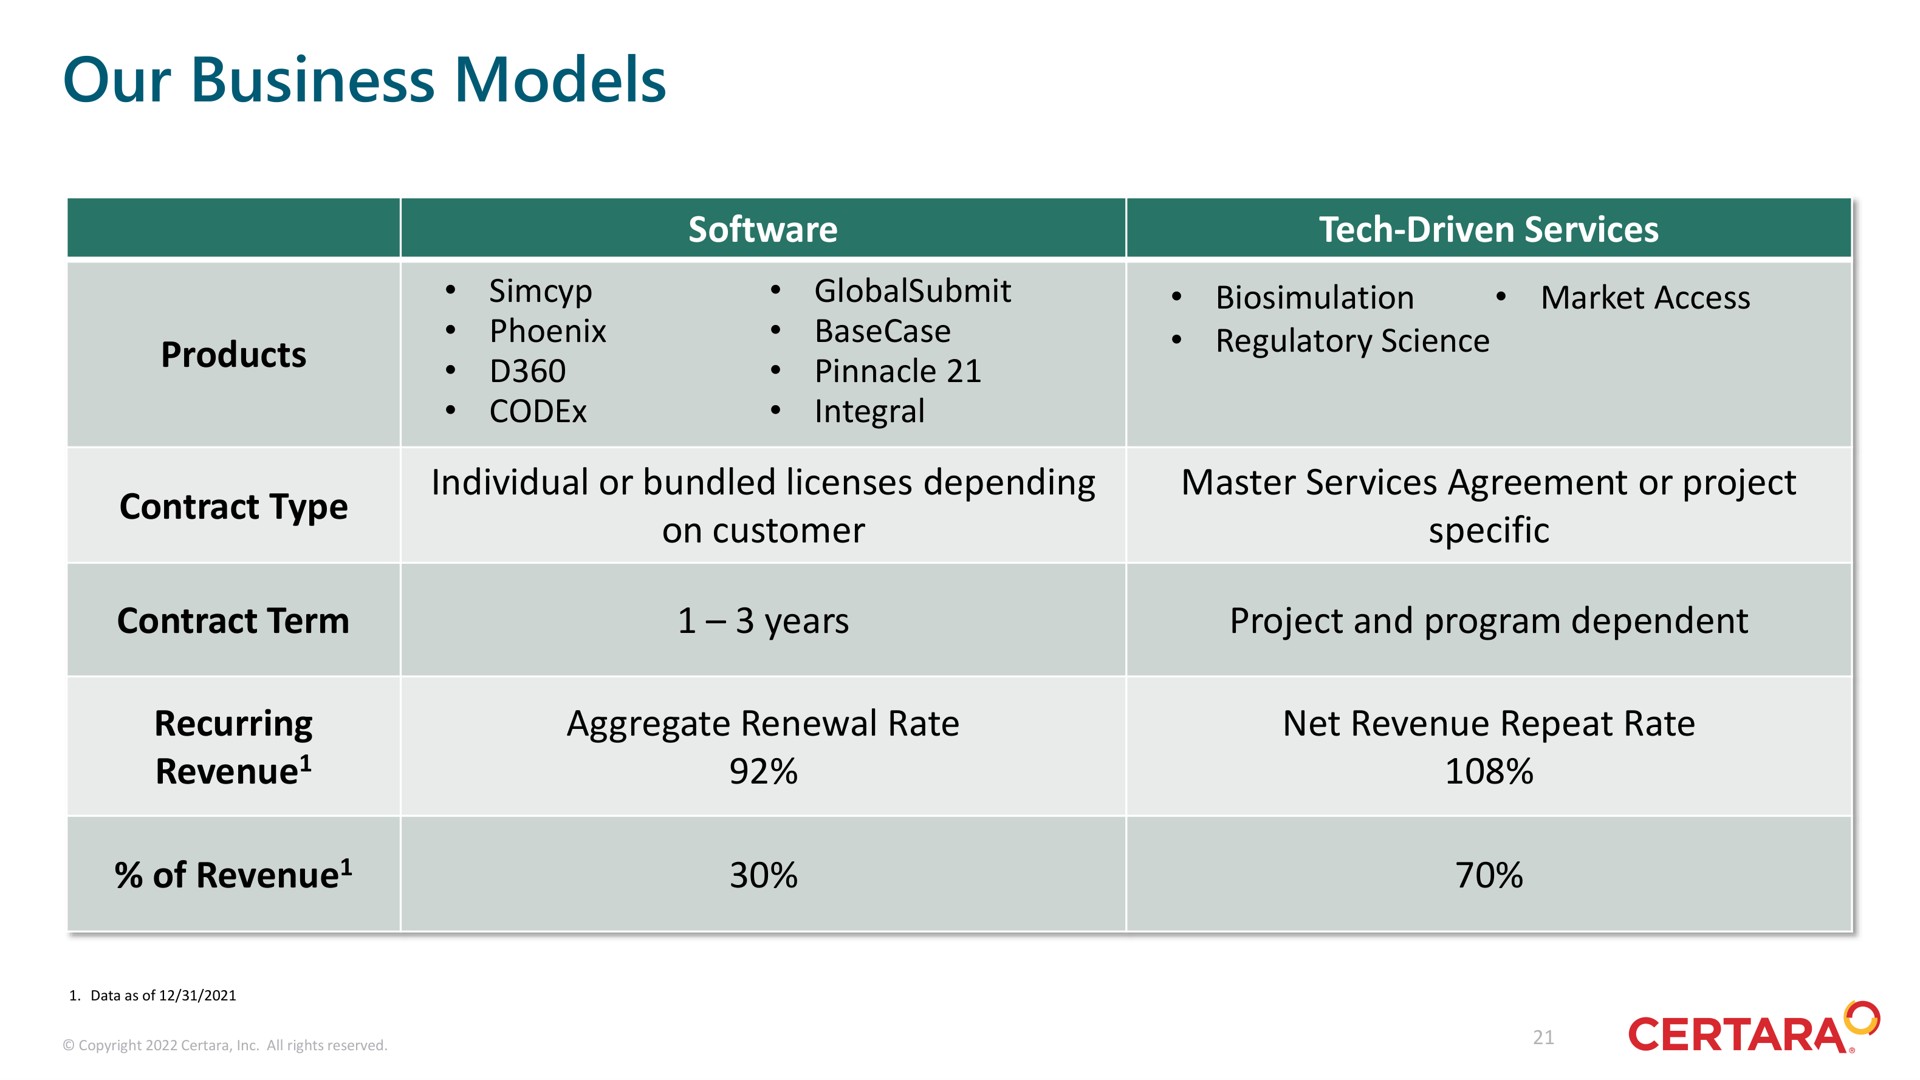 our business models a tech driven services | Certara